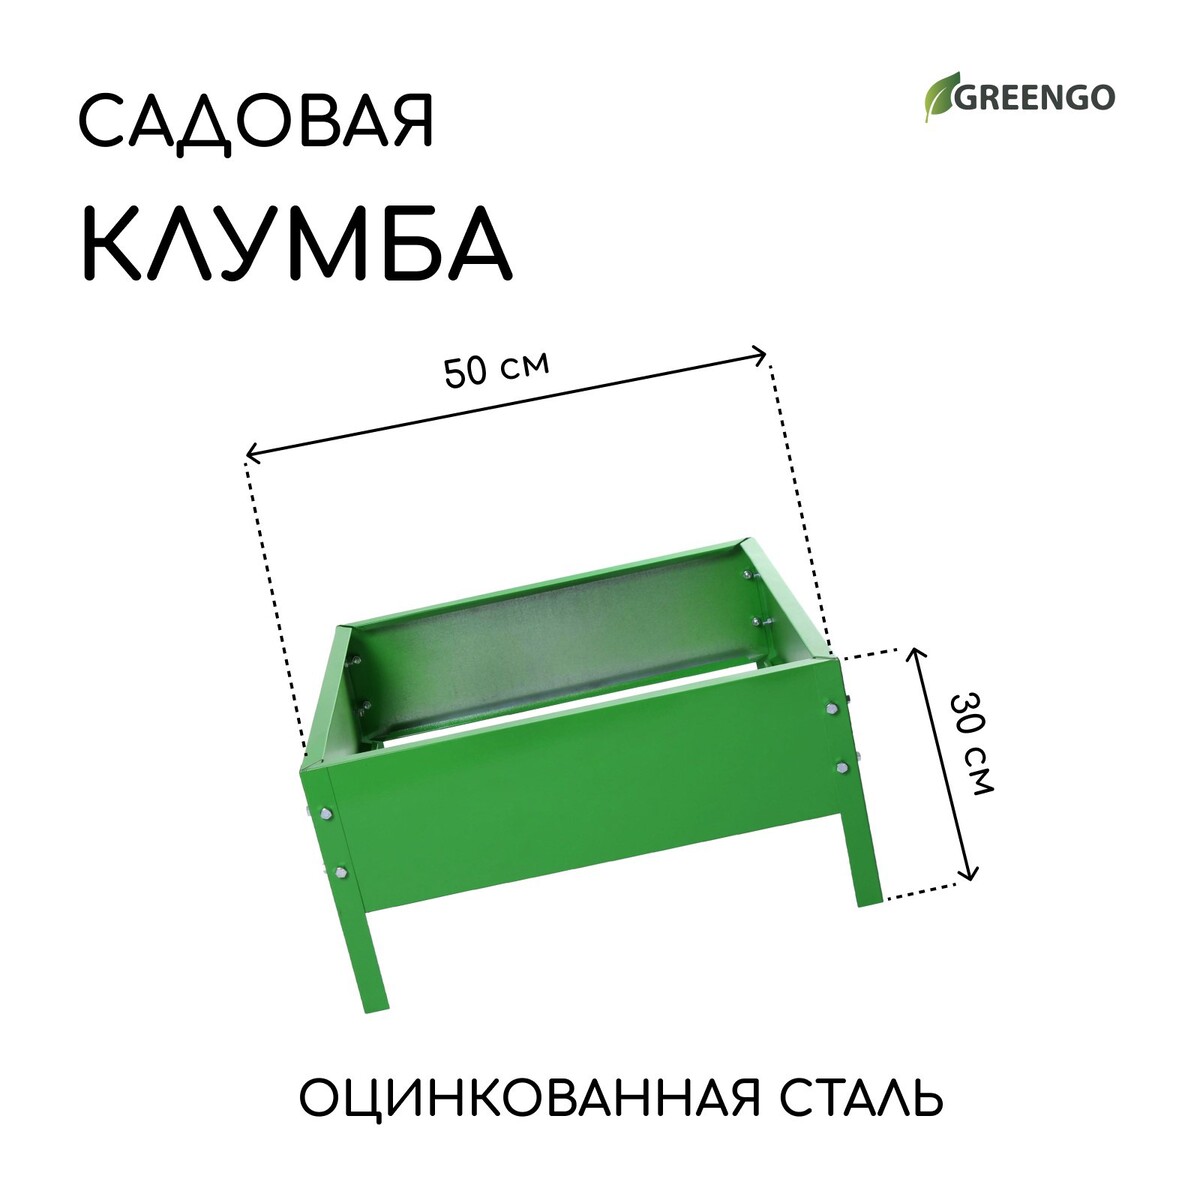 Клумба оцинкованная, 50 × 50 × 15 см, ярко-зеленая, greengo клумба оцинкованная 50 × 50 × 15 см ярко зеленая greengo